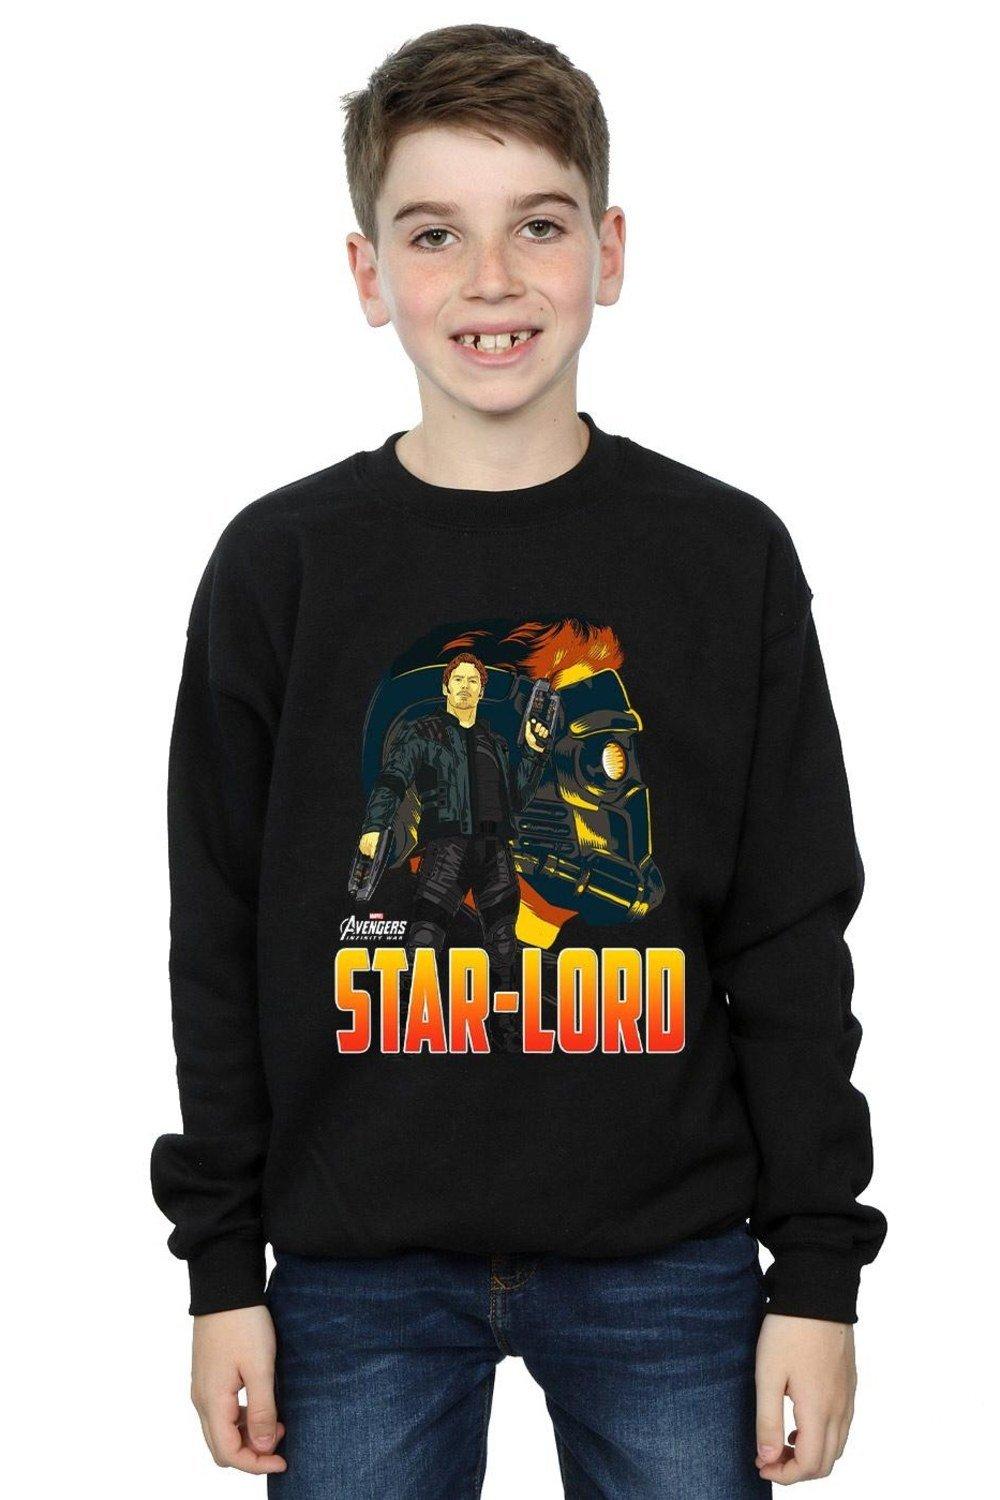 Avengers Infinity War Star Lord Character Sweatshirt